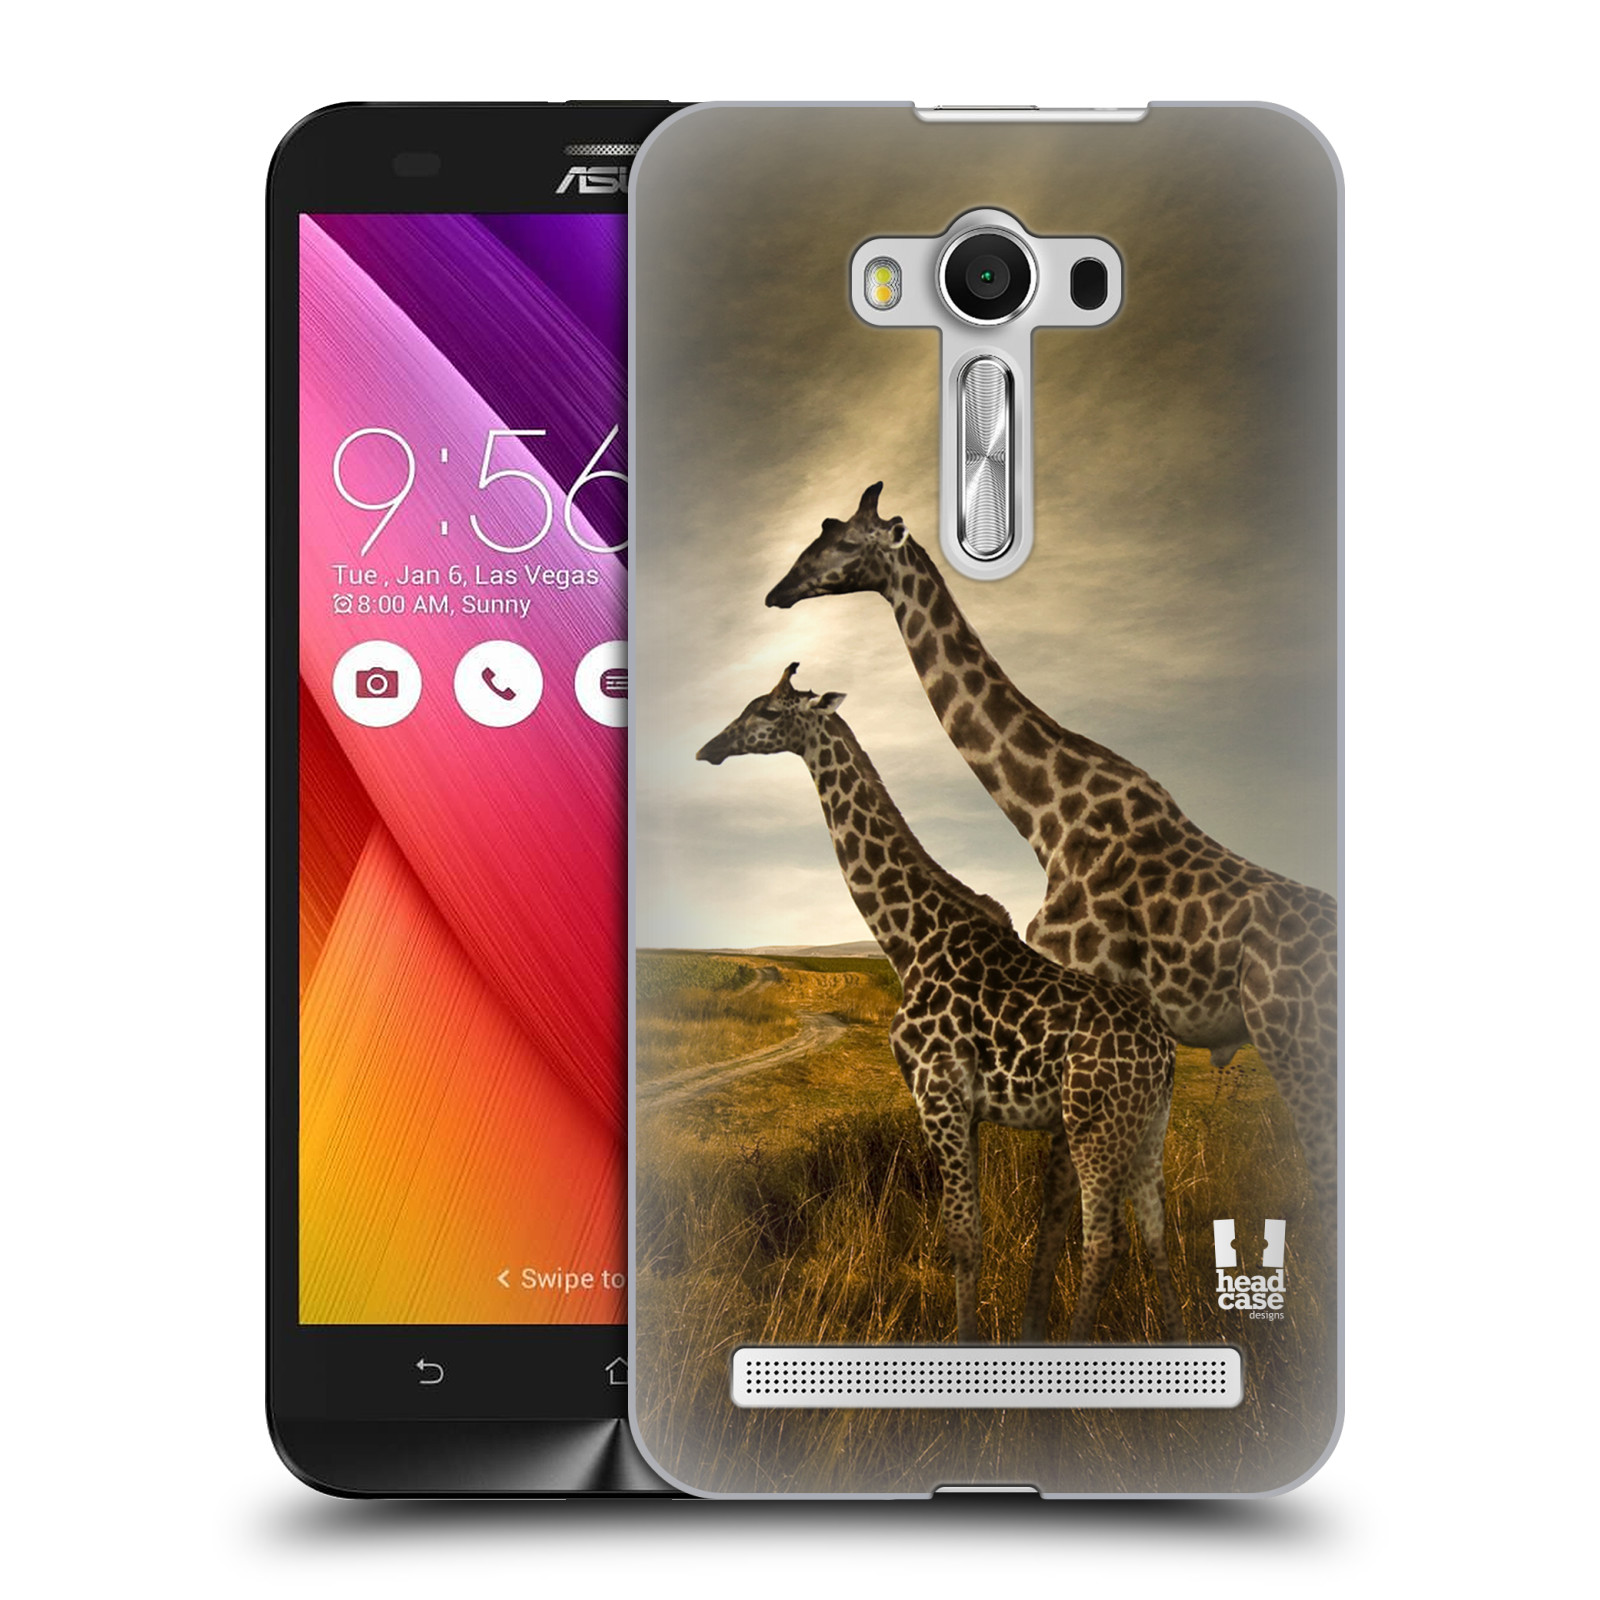 HEAD CASE plastový obal na mobil Asus Zenfone 2 LASER (5,5 displej ZE550KL) vzor Divočina, Divoký život a zvířata foto AFRIKA ŽIRAFY VÝHLED